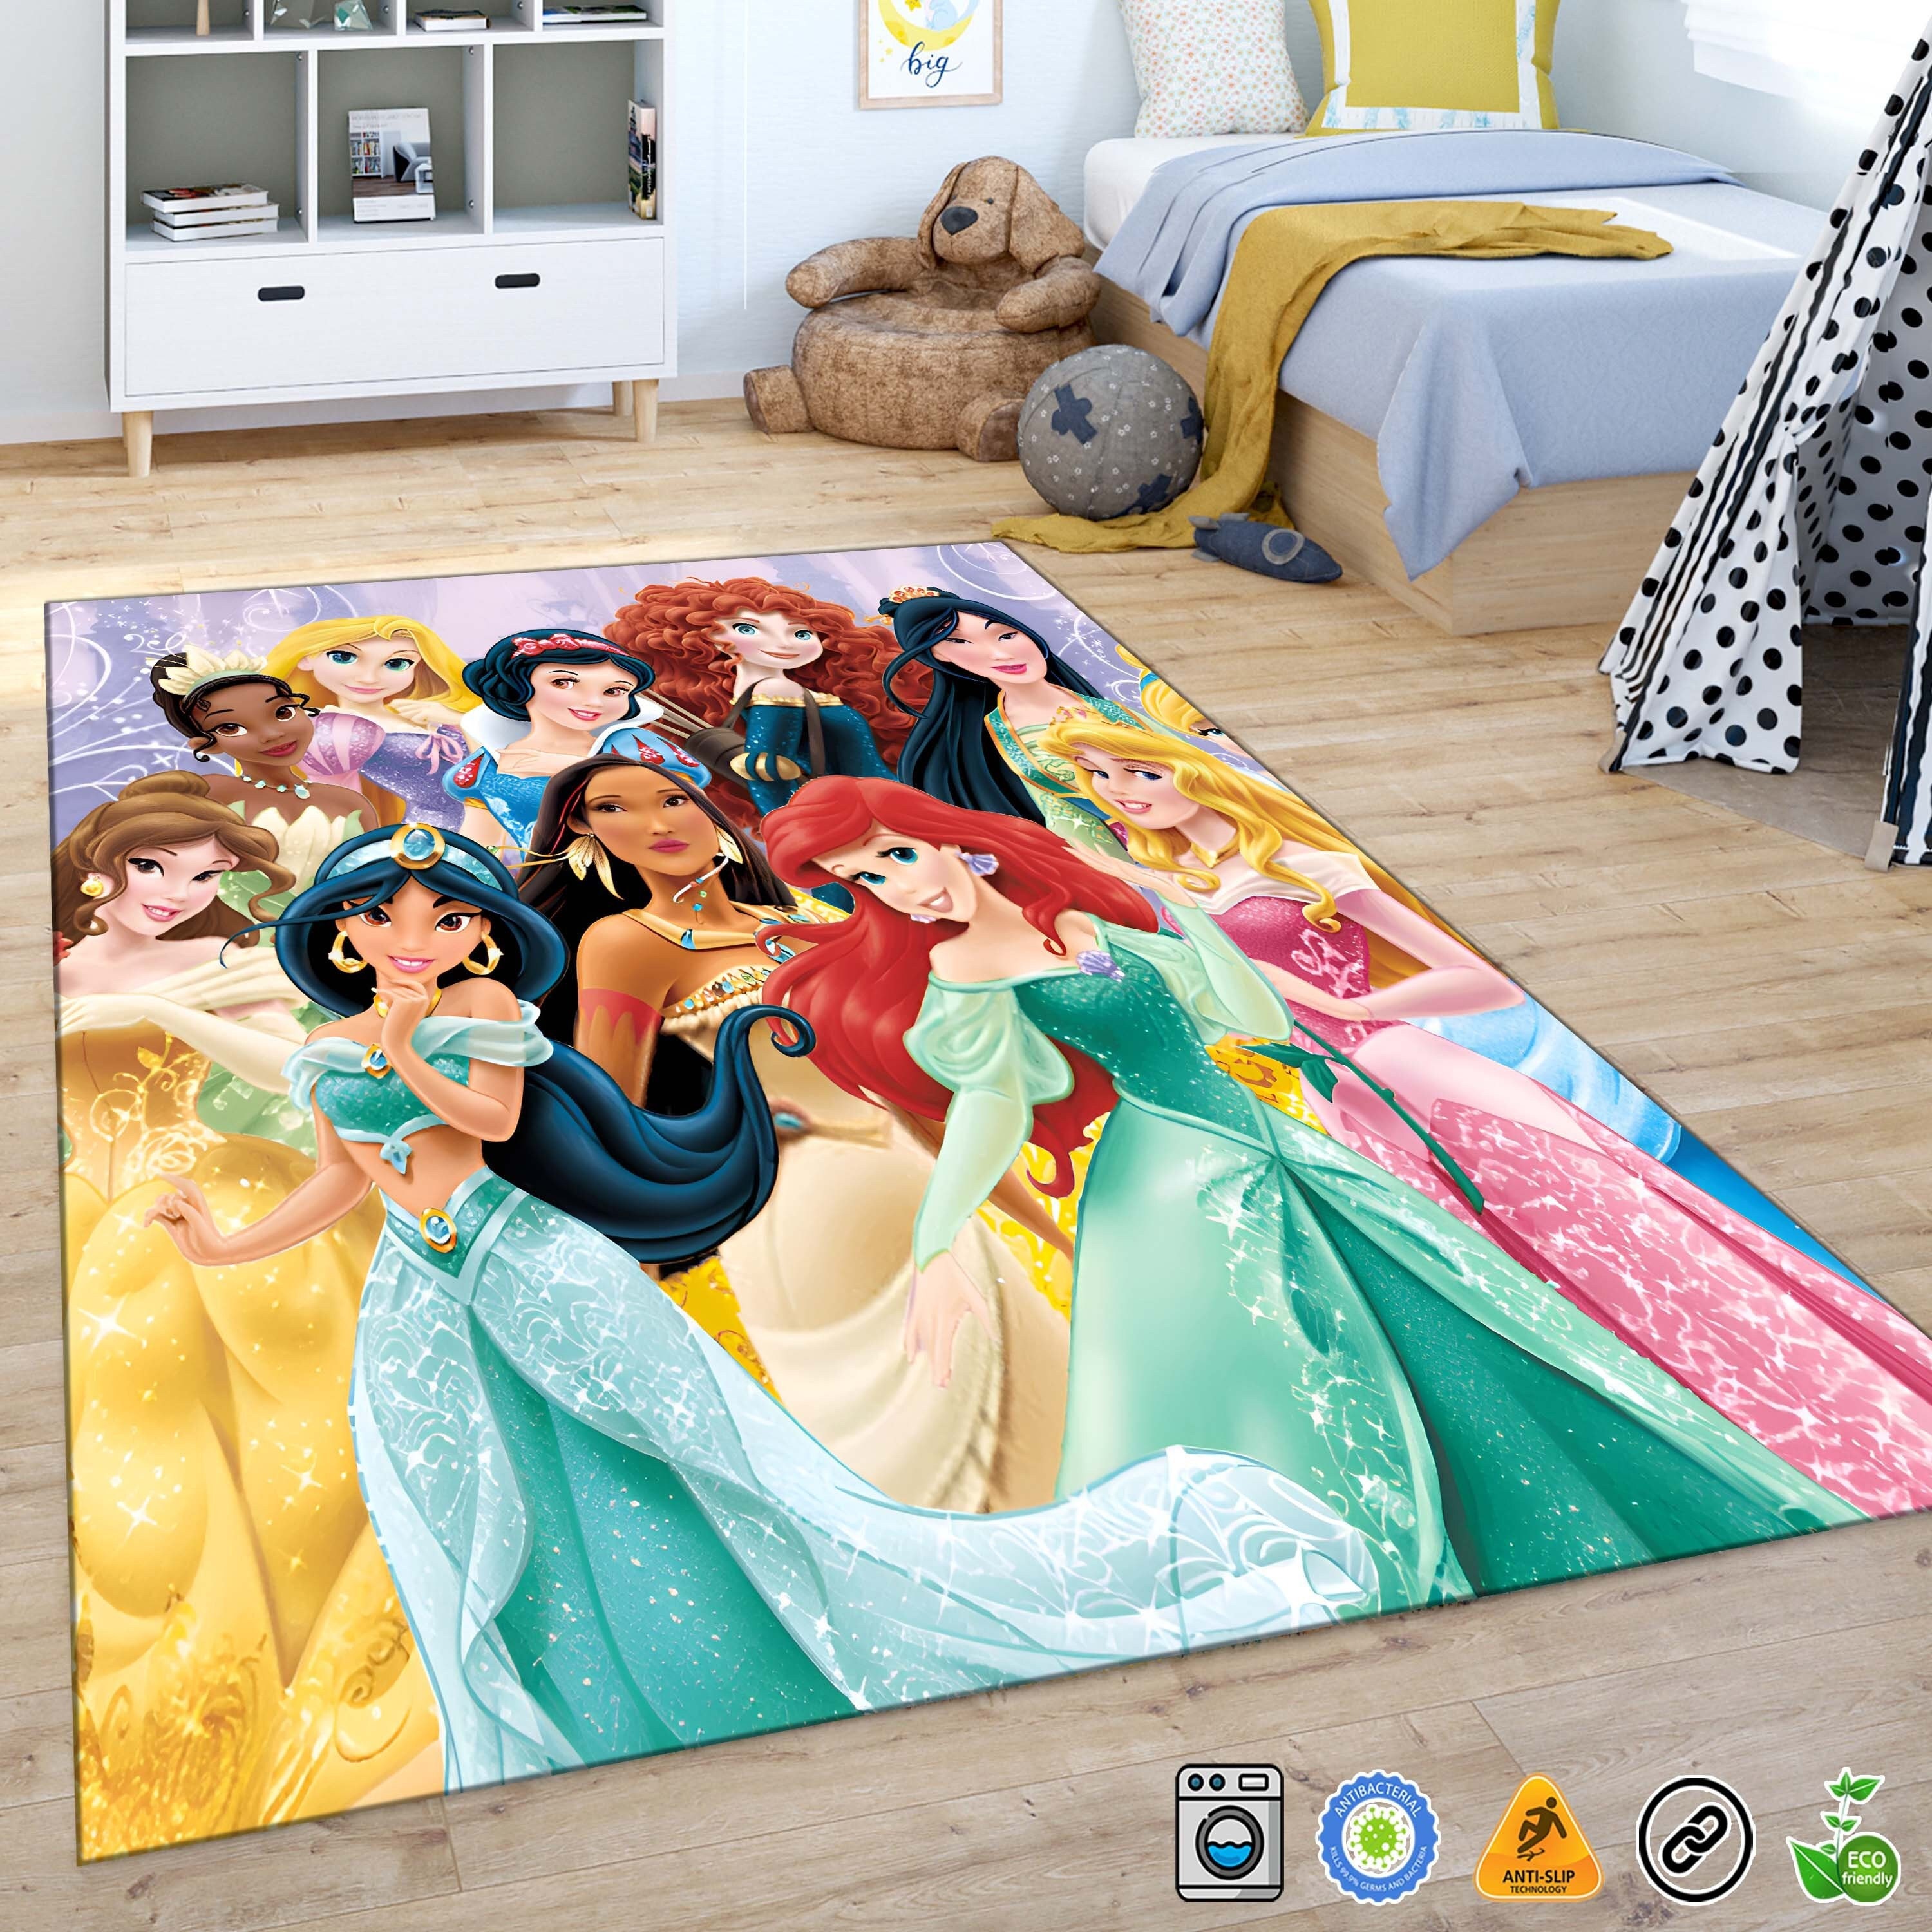 Discover Princesses, Kids Room Rug, Rapunzel Rug, Snow White, Ariel Rug, Fa Mulan Rug, Girl Room Rug, Cute Rug, Nursery Rug, Kids Room Decor